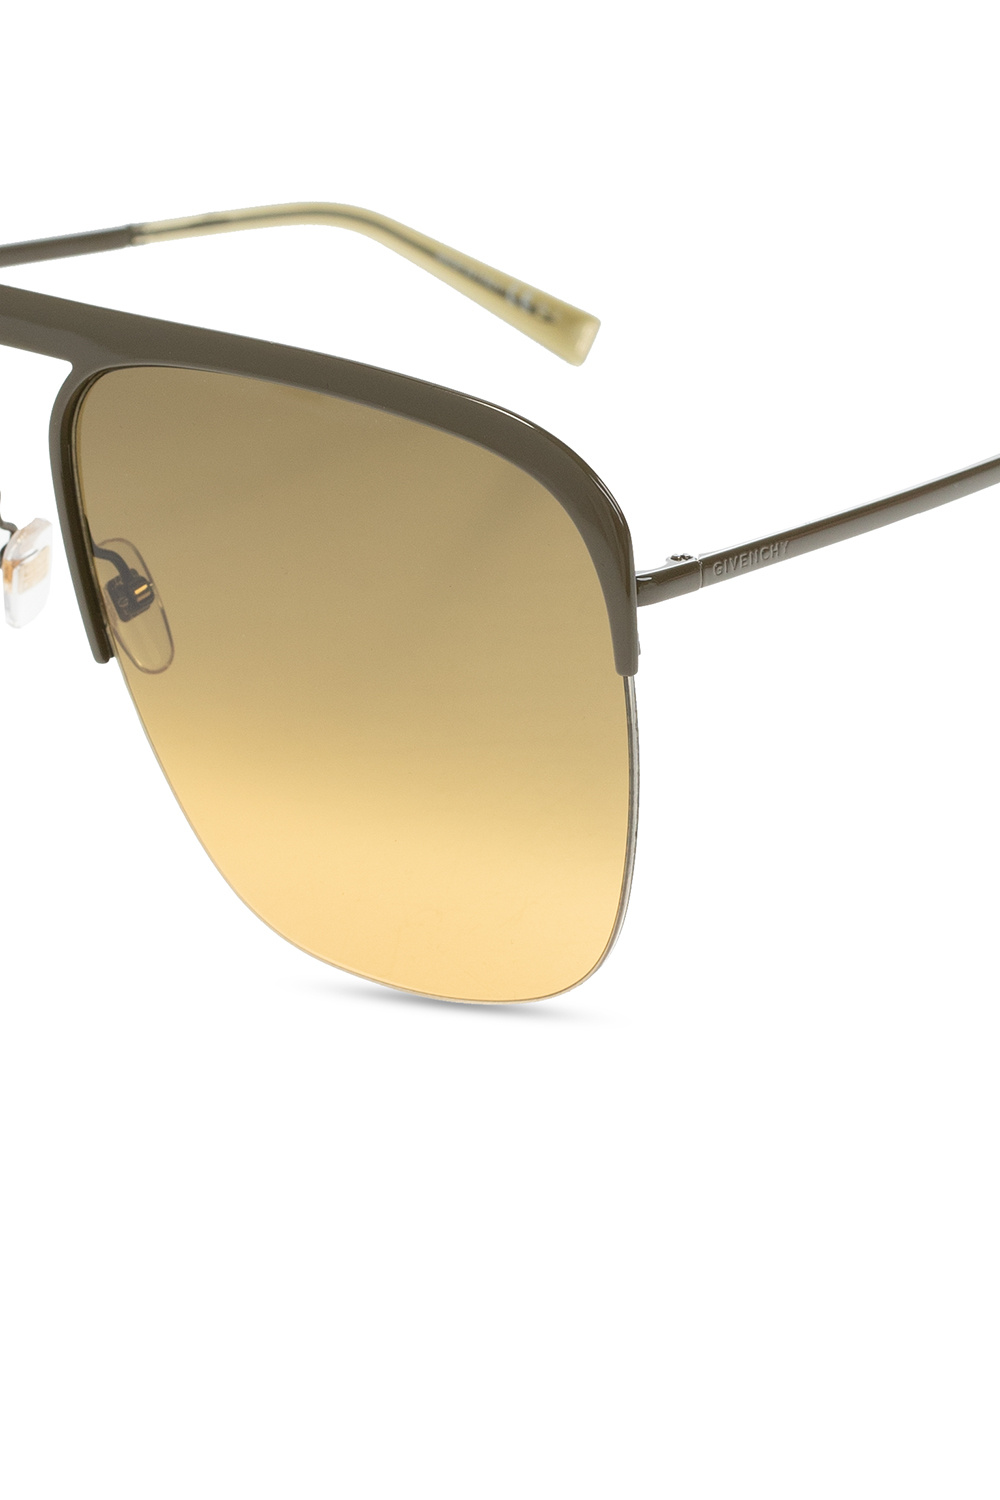 IetpShops | Givenchy x Oakley pilot | Carrera rectangle-frame Persol  sunglasses - Men's Accessories - frame Persol sunglasses